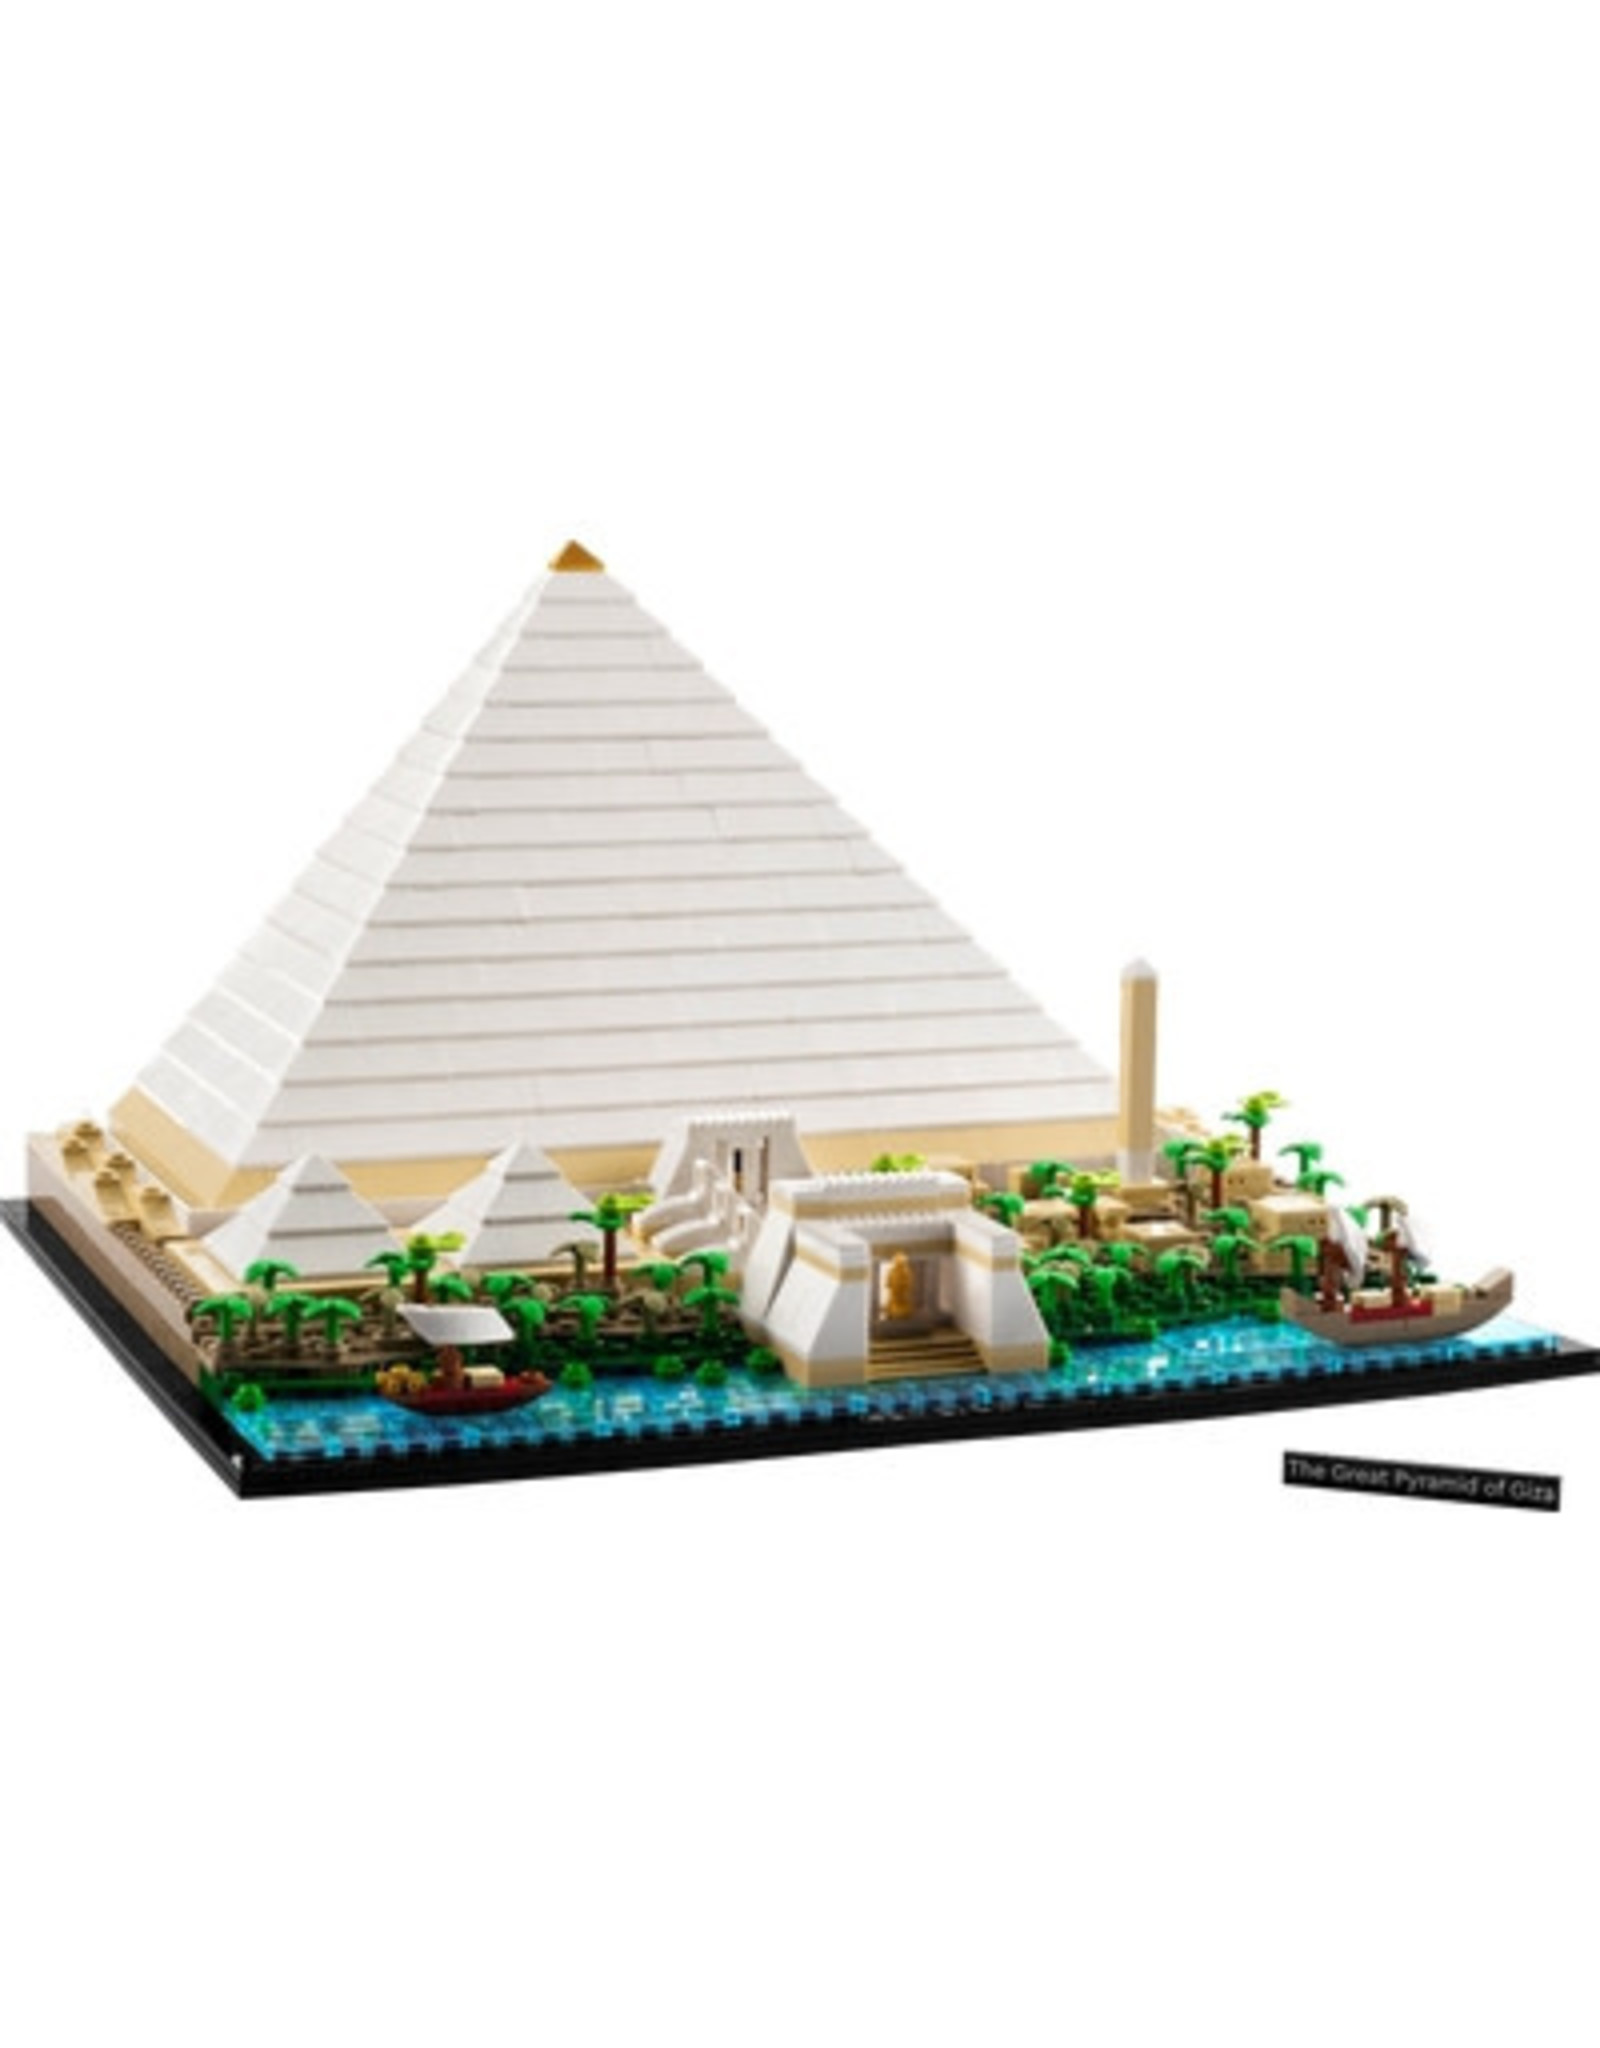 LEGO Legon Architecture 21058  Grote Piramide van Gizeh